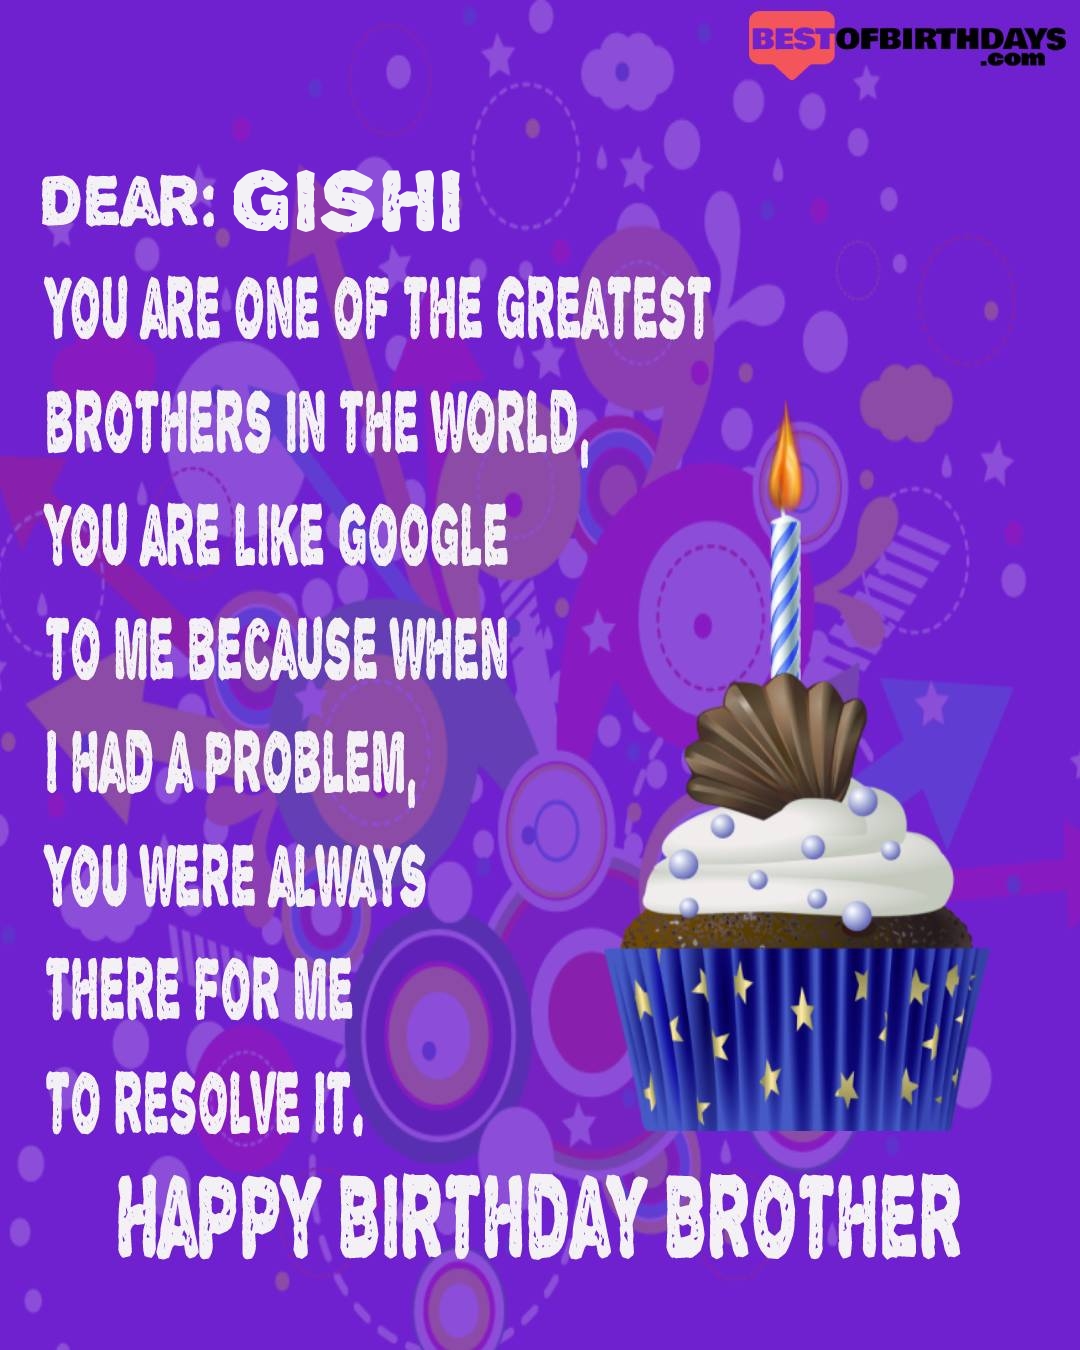 Happy birthday gishi bhai brother bro